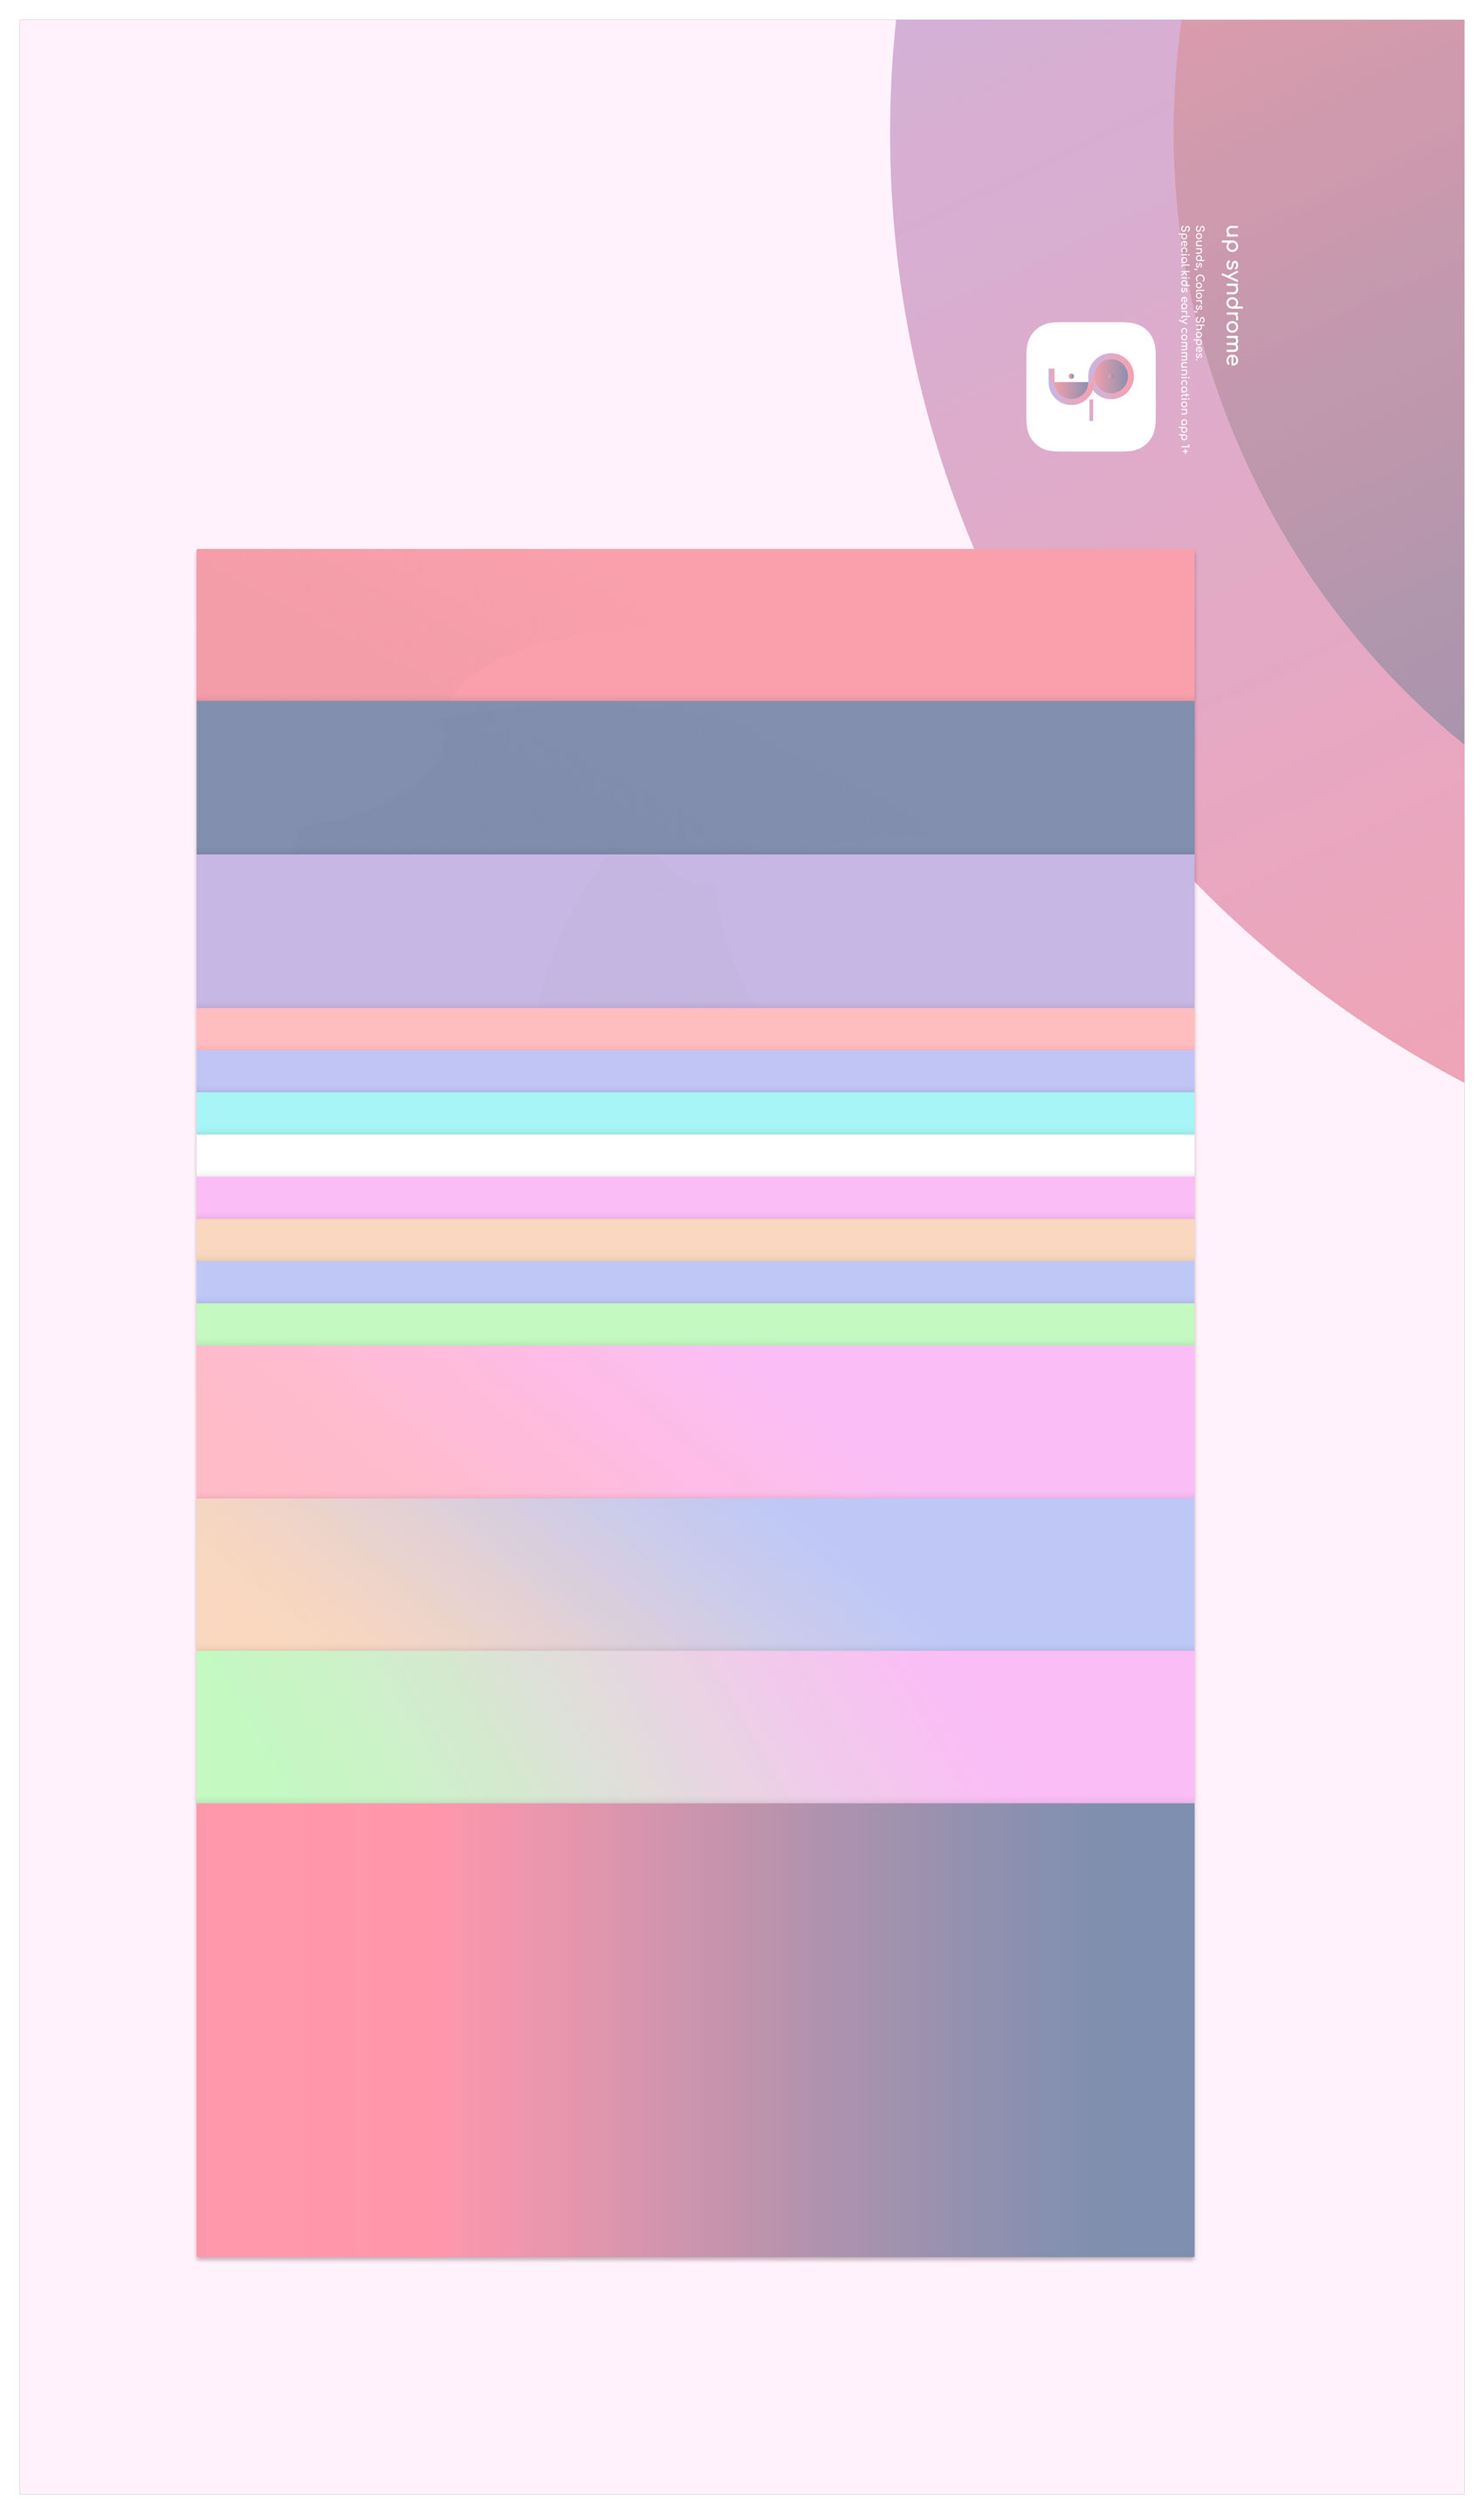 Colors palette and gradients